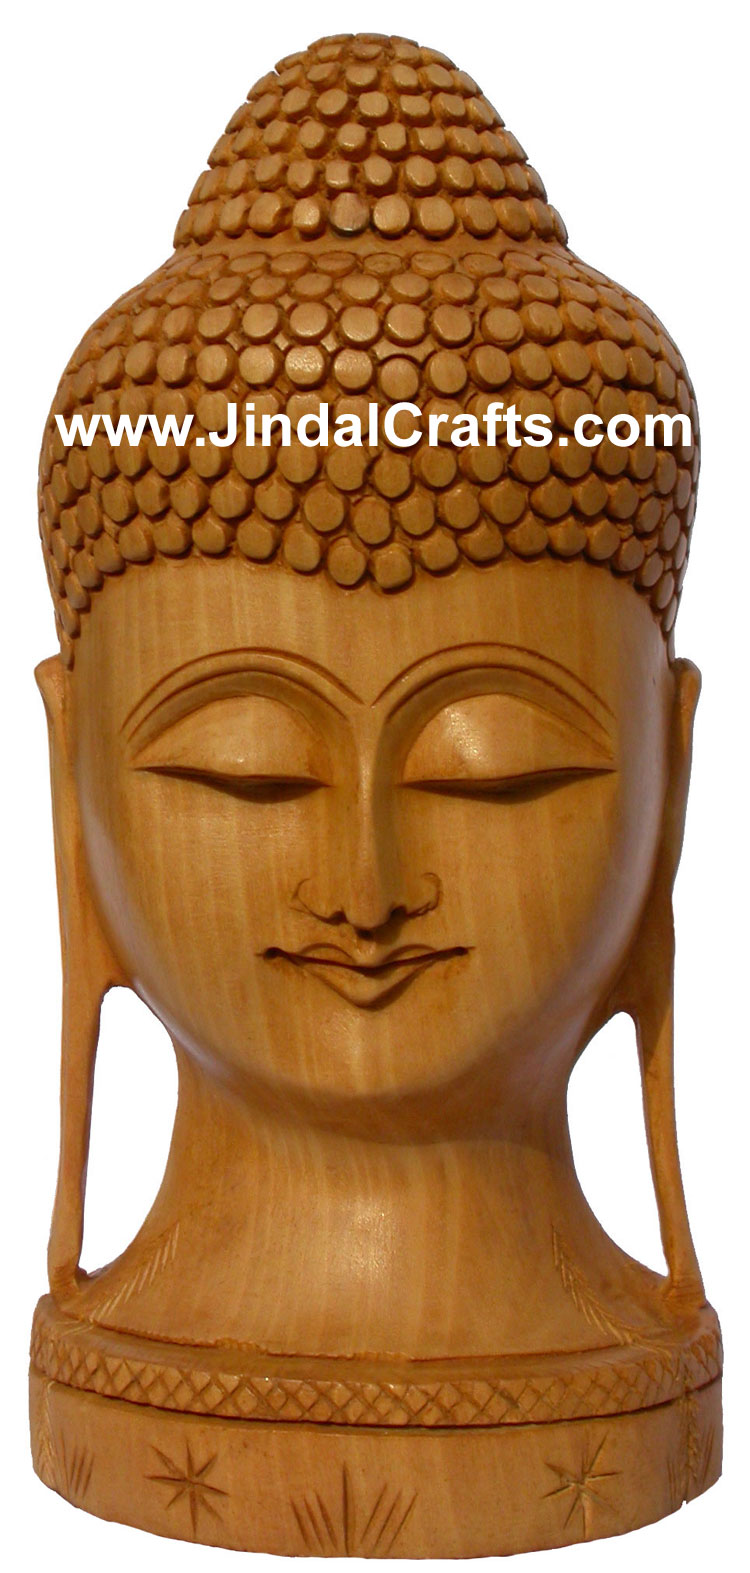 Wood Sculpture Peaceful Buddha Head Figure Buddhist Art